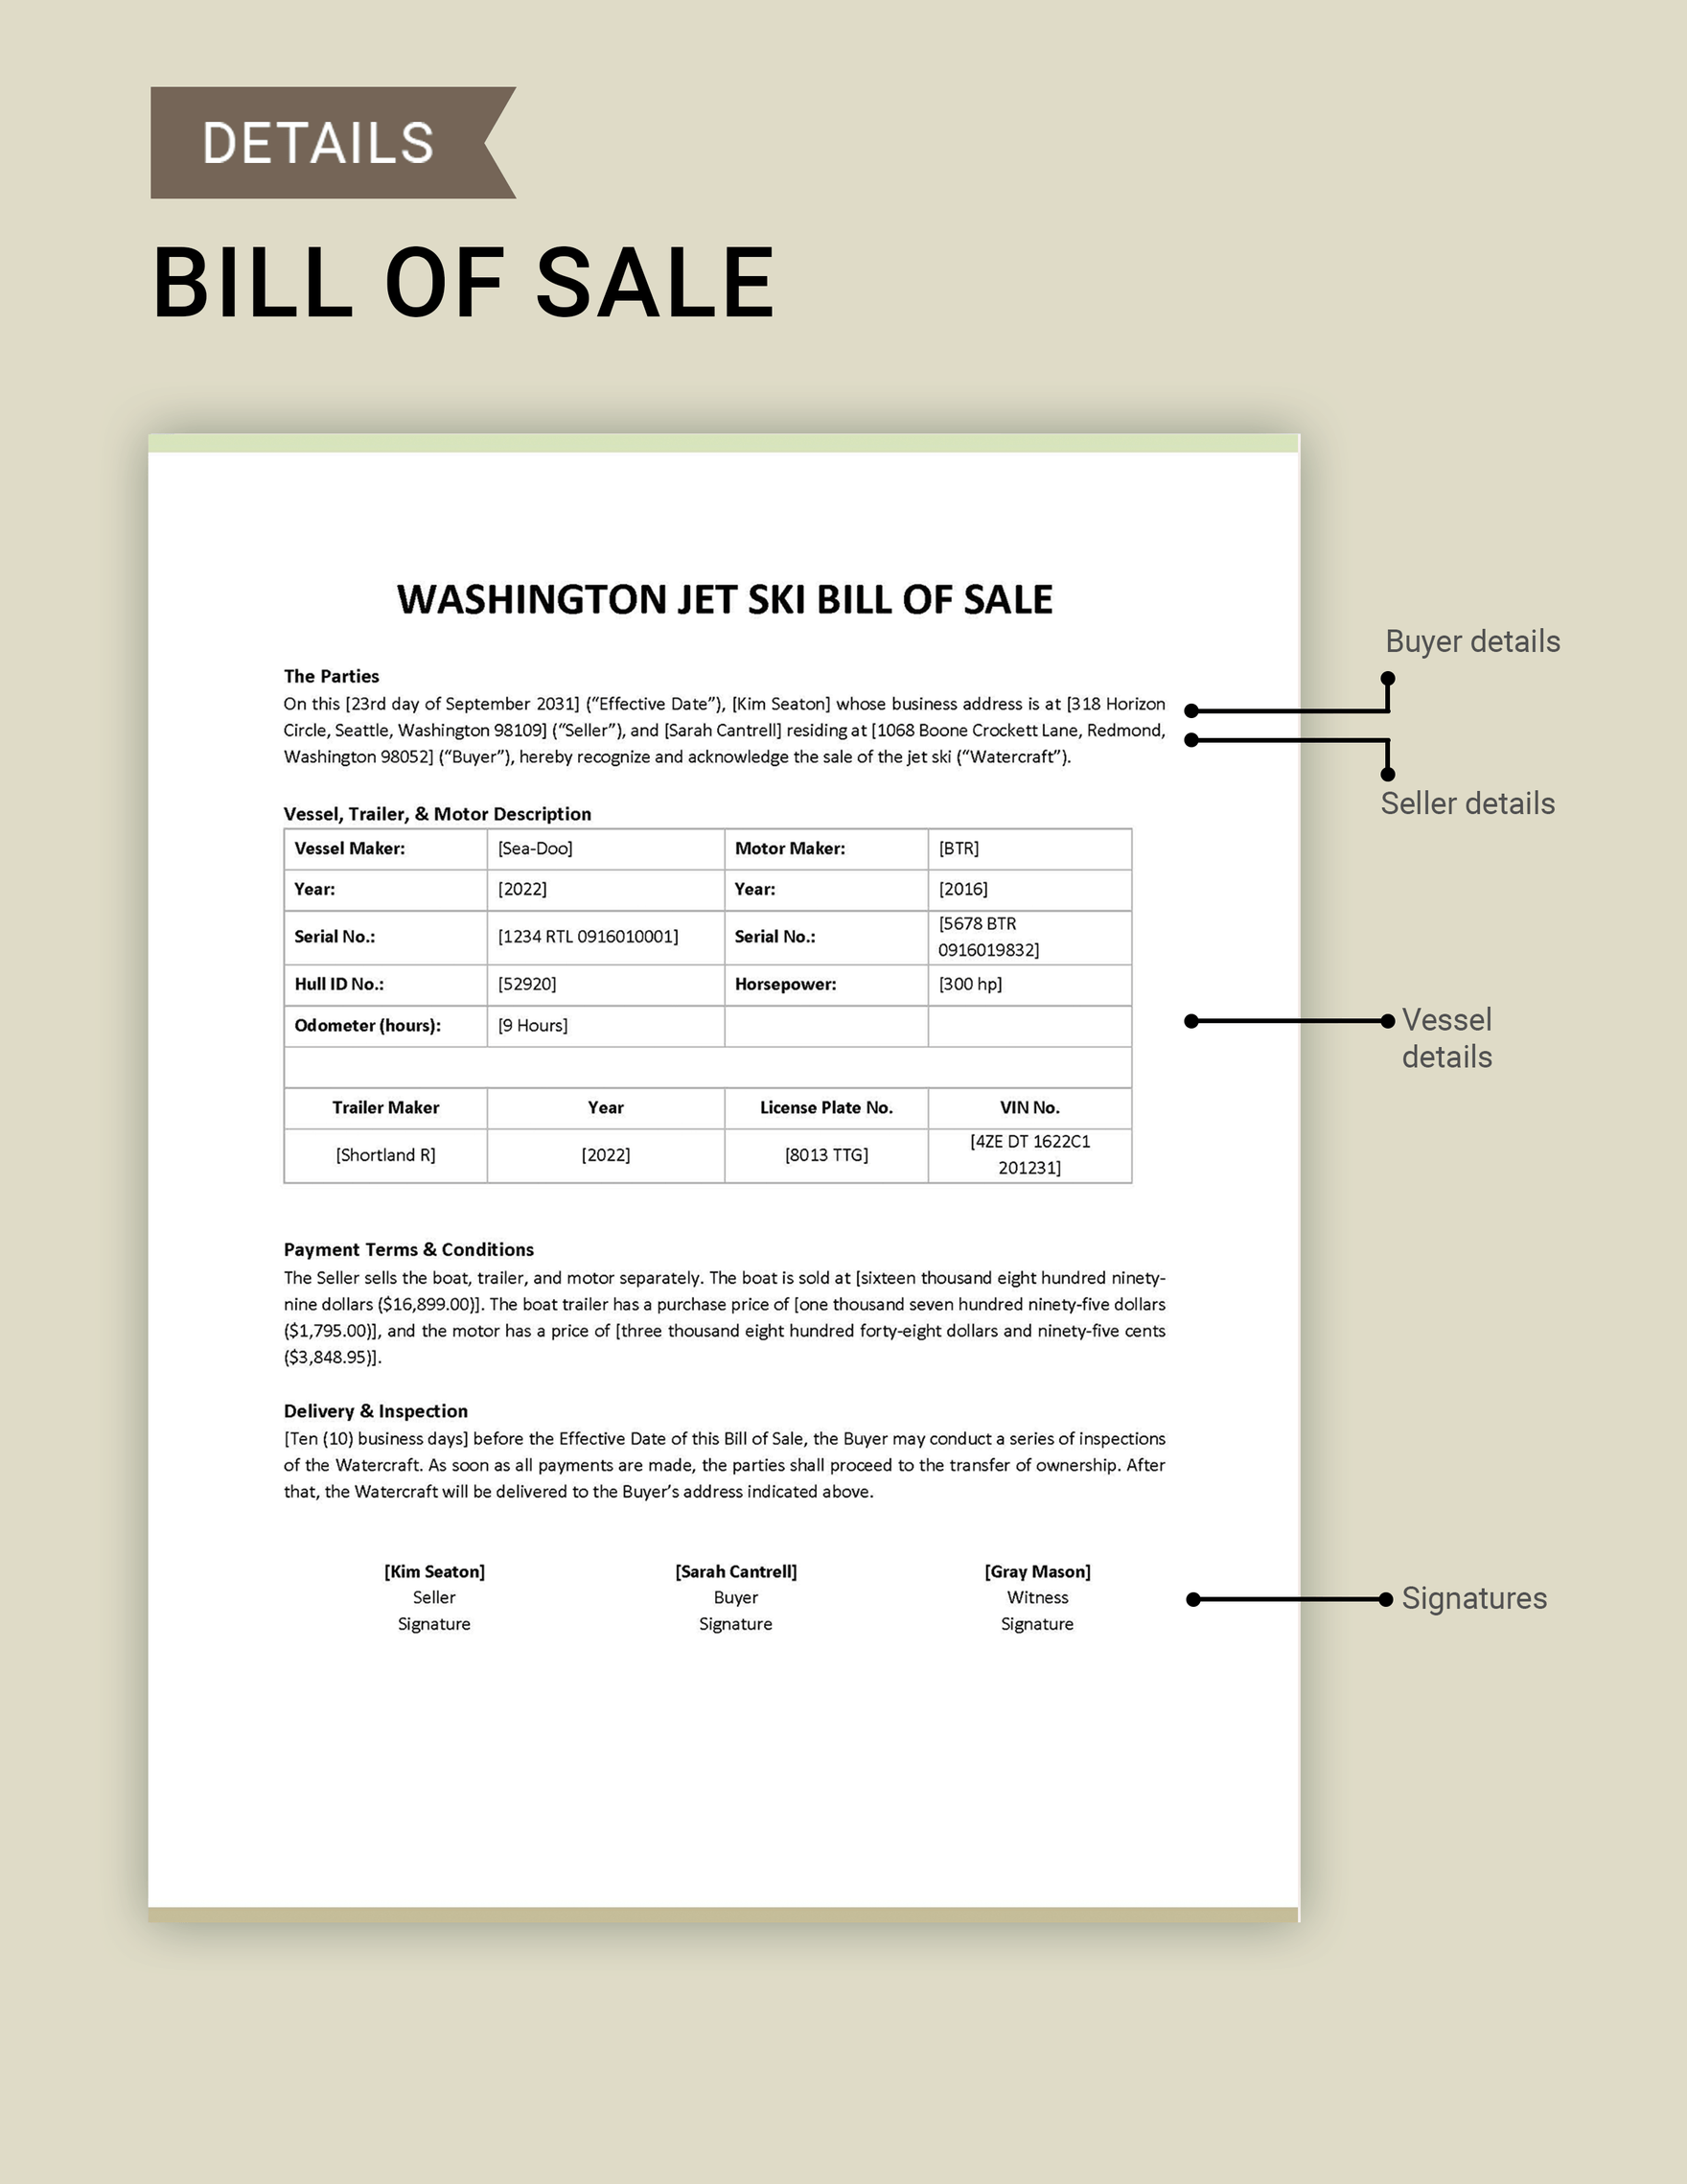 Washington Jet Ski Bill of Sale Template